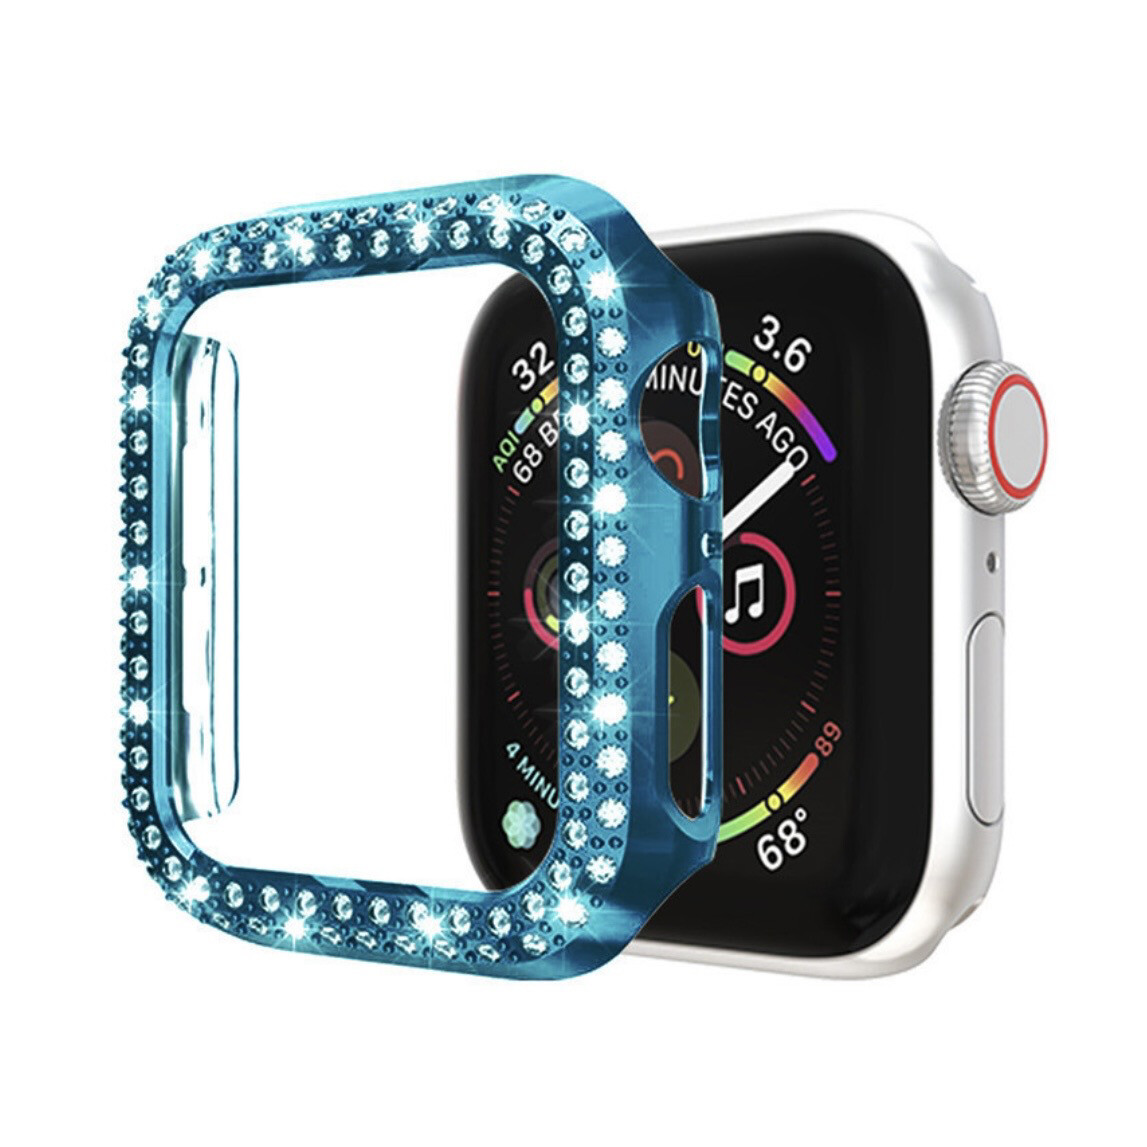 diamond case For Apple Watch كفر دايموند لساعة أبل